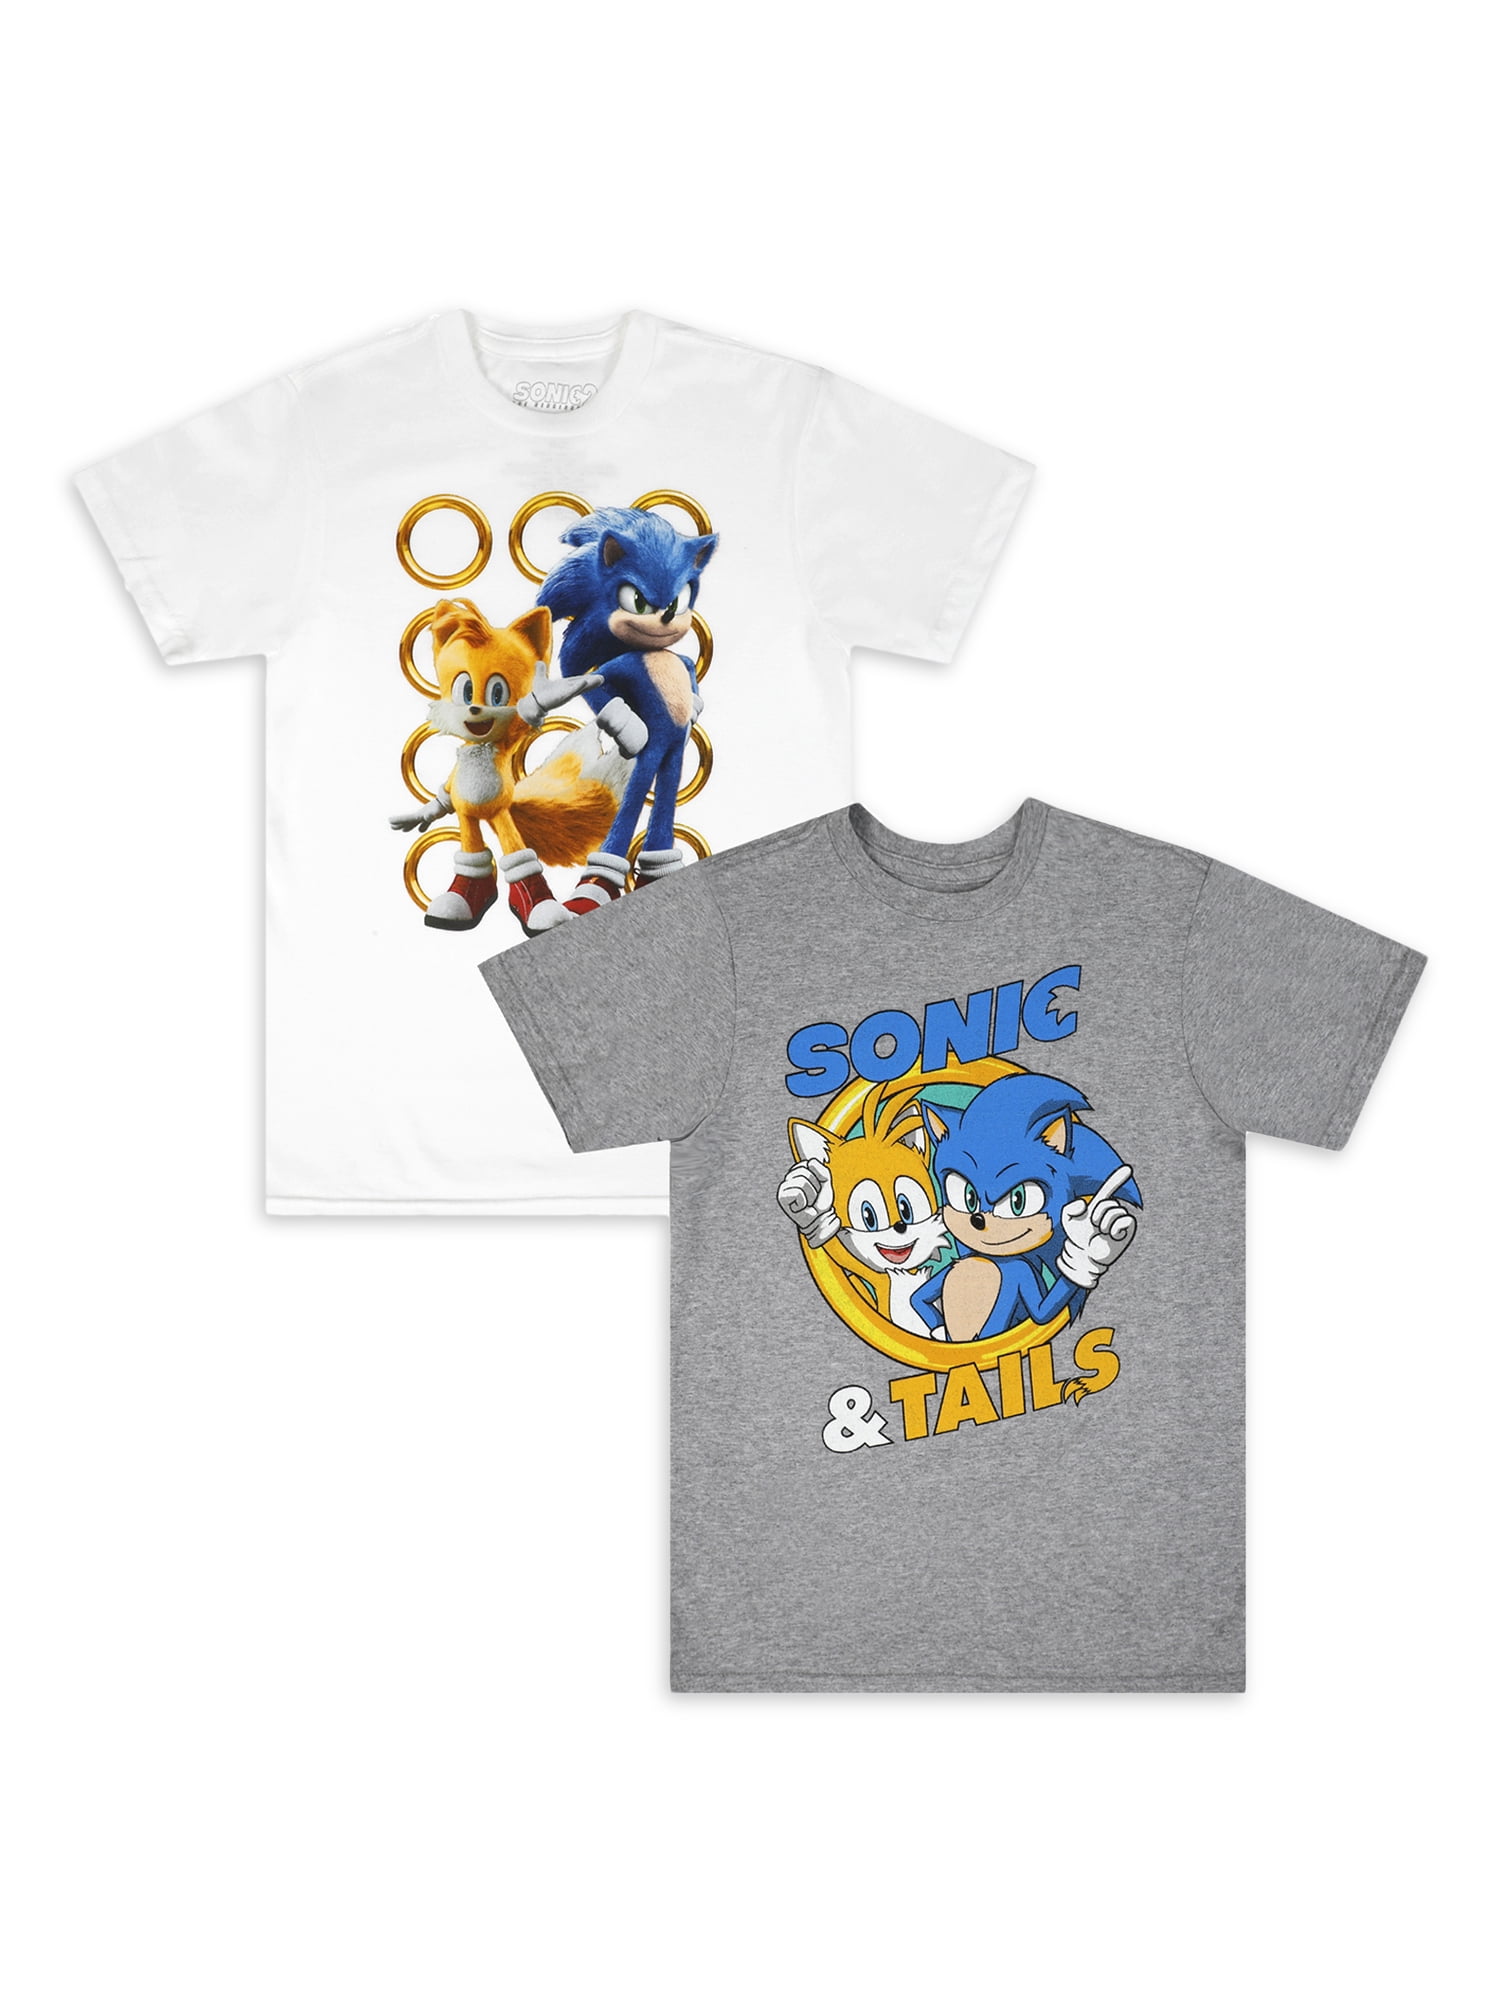 Sonic The Hedgehog movie boys graphic tee shirt New 